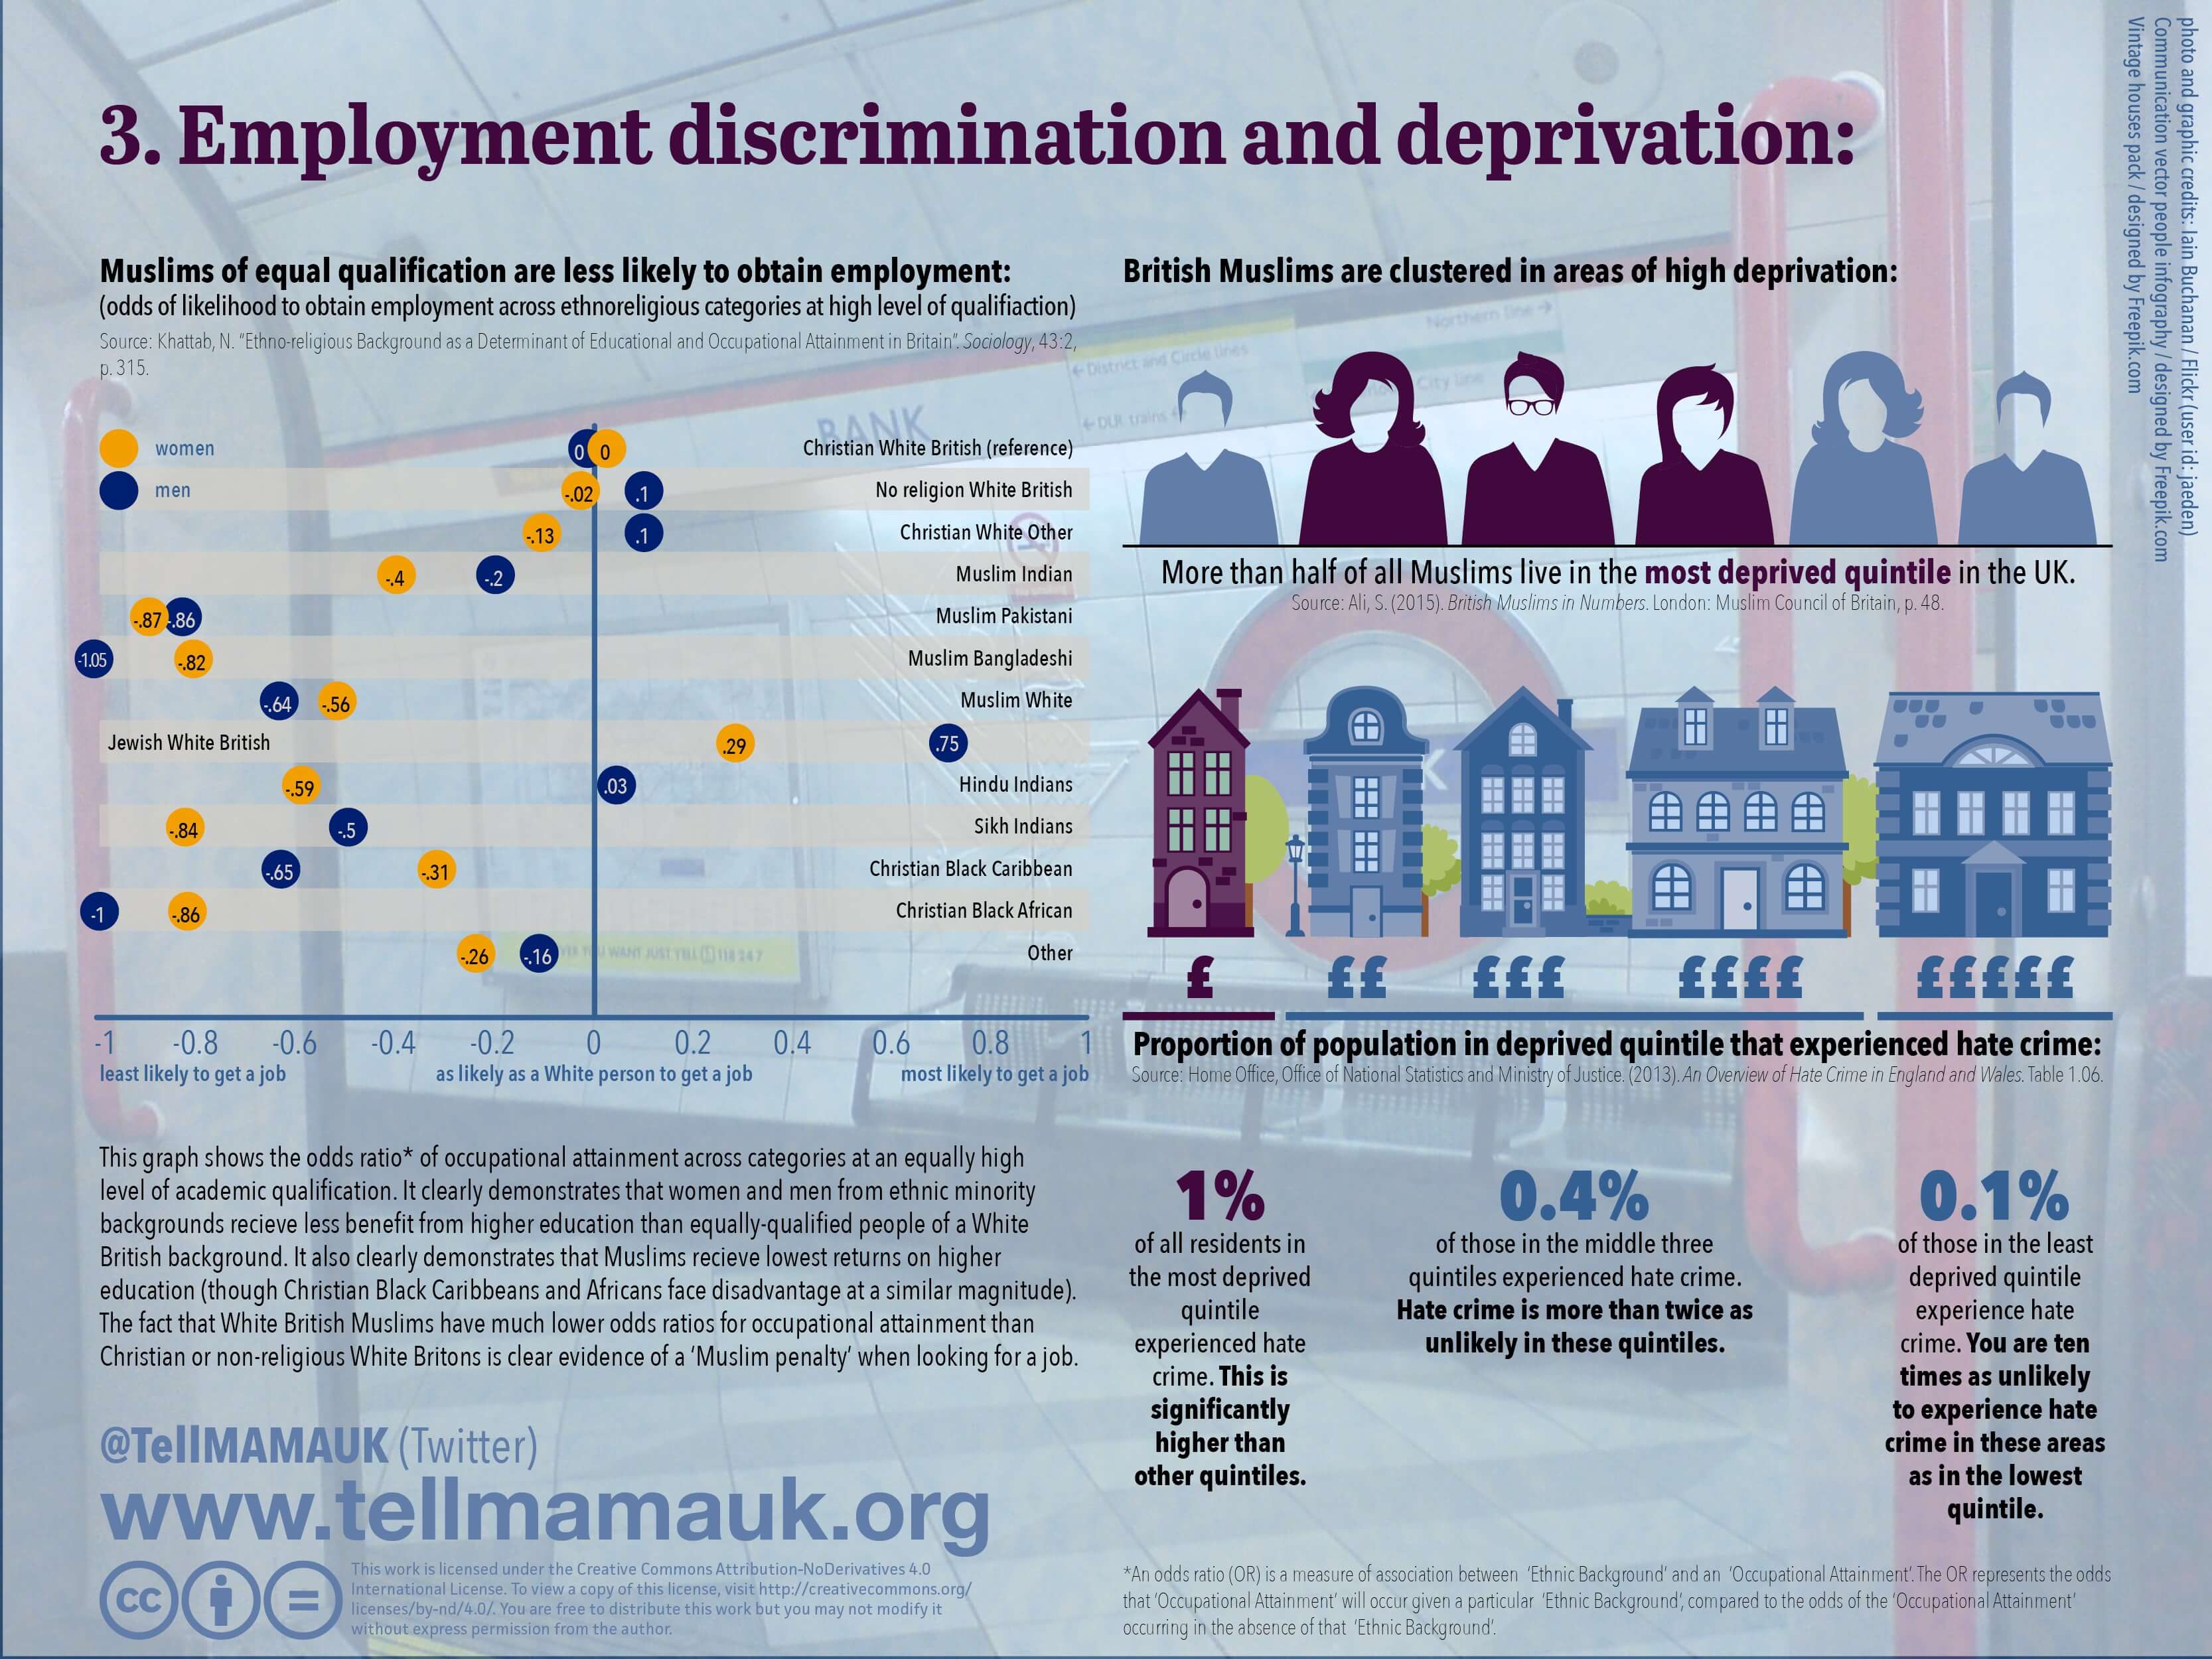 Muslims face employment discrimination and economic deprivation